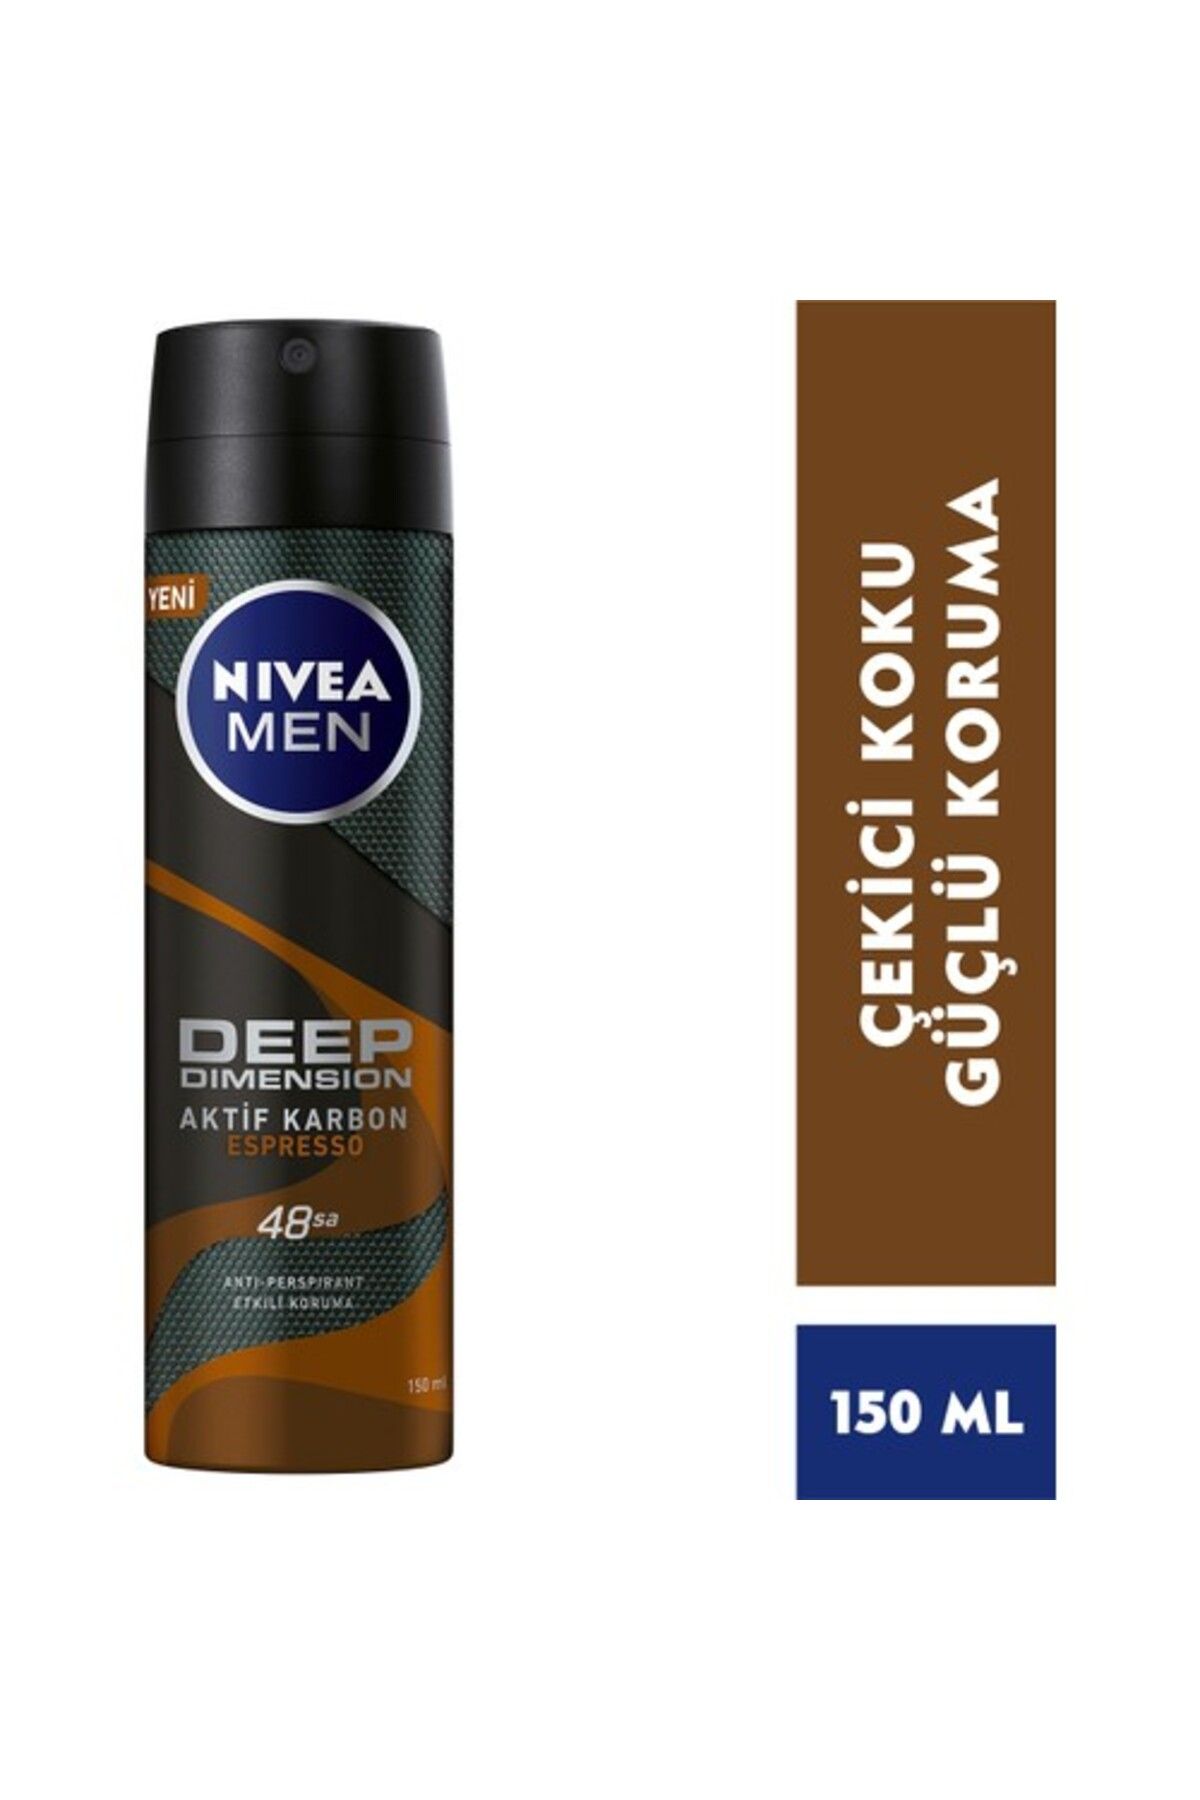 NIVEA Men Erkek Sprey Deodorant Deep Dimension Espresso 150ml, 48 Saat Anti-perspirant Koruma